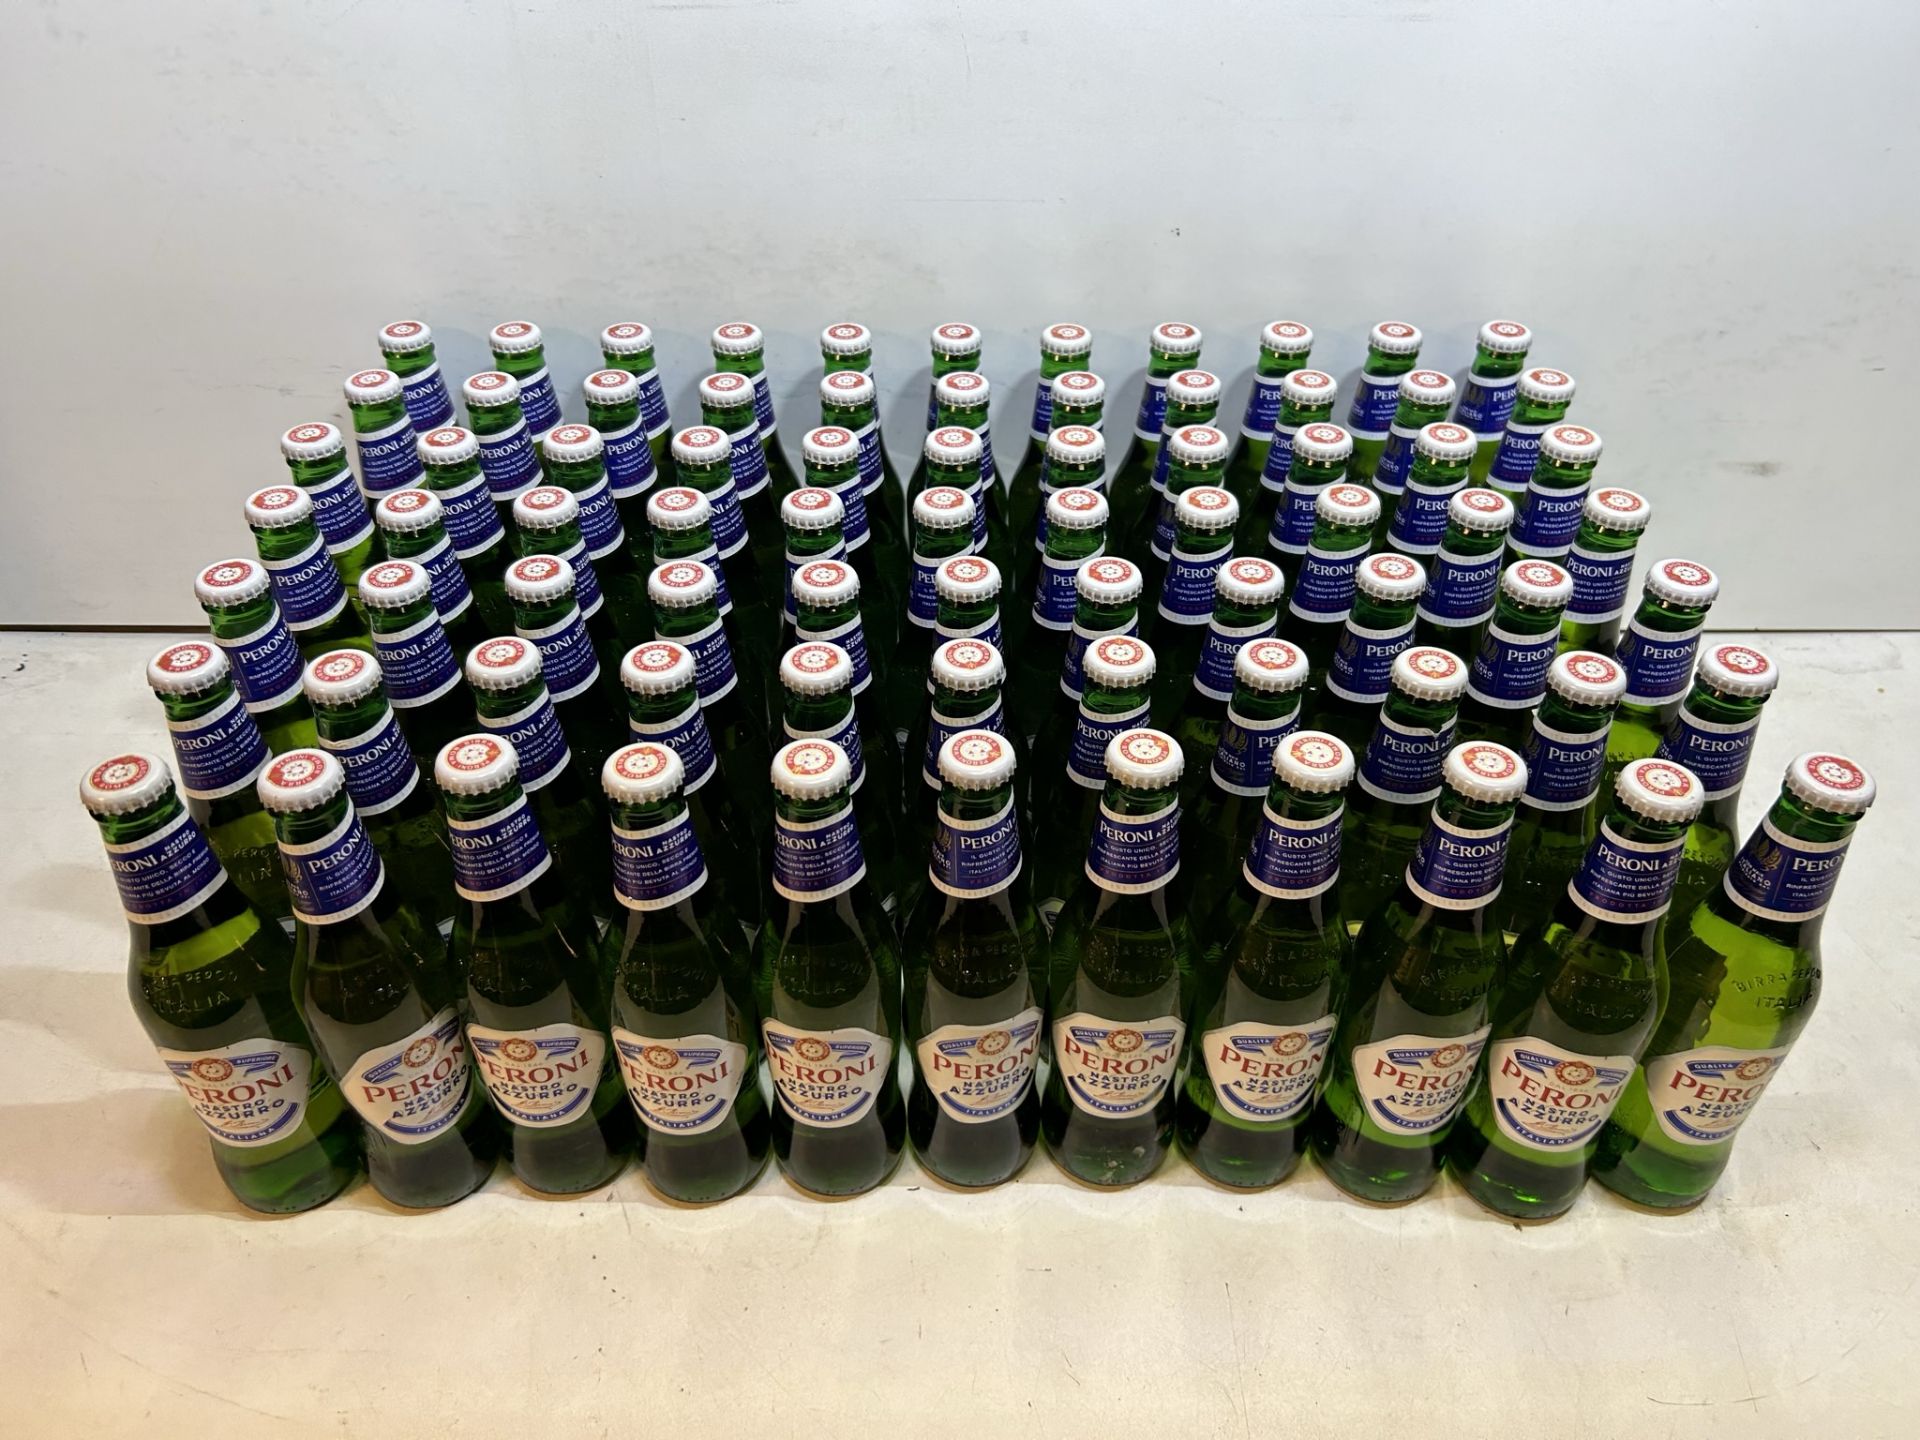 120 x 330ml Bottles of Peroni/Corona Lager Beer - Image 2 of 4